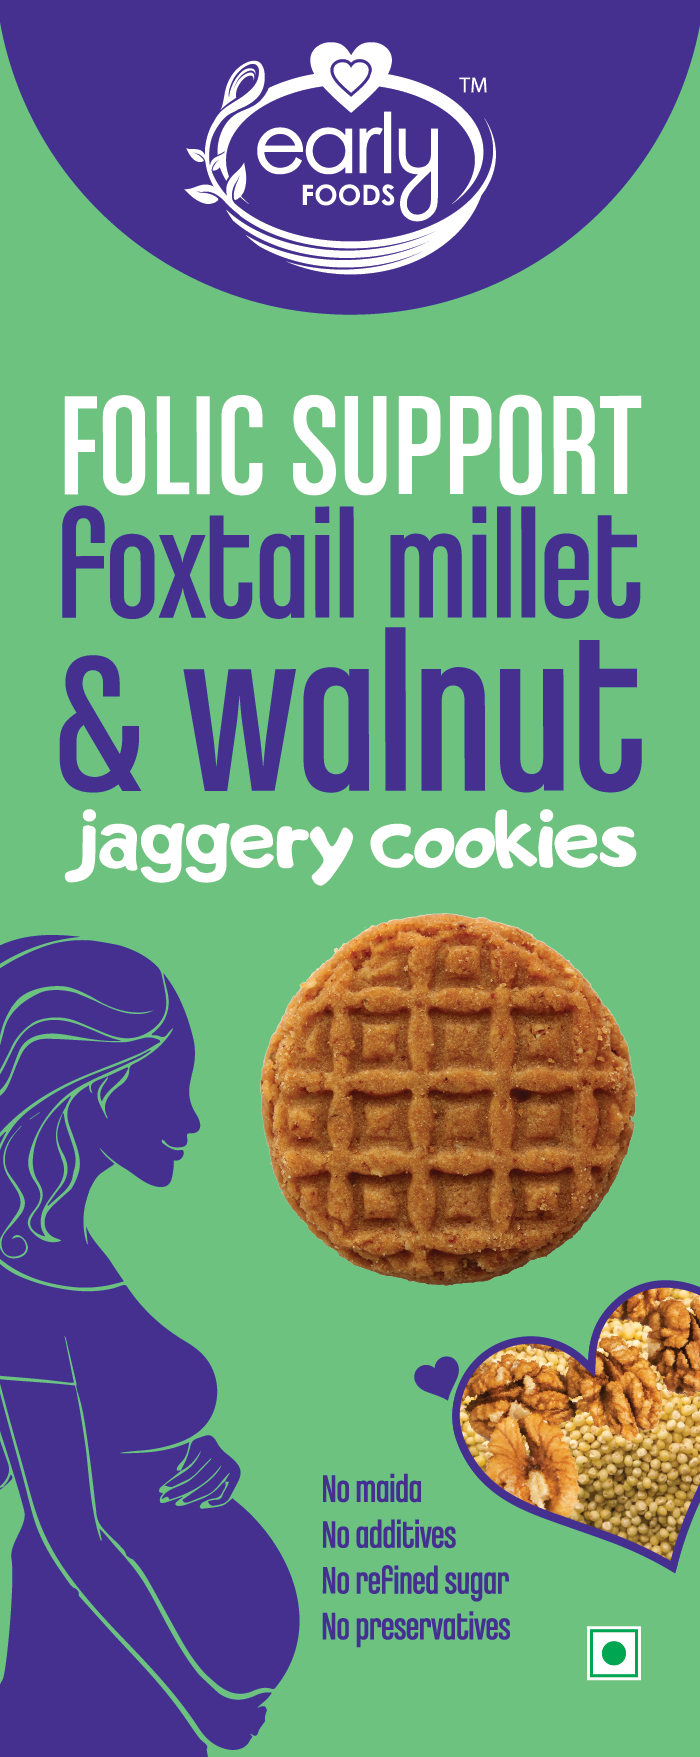 Walnut & Foxtail Millet Jaggery Cookies